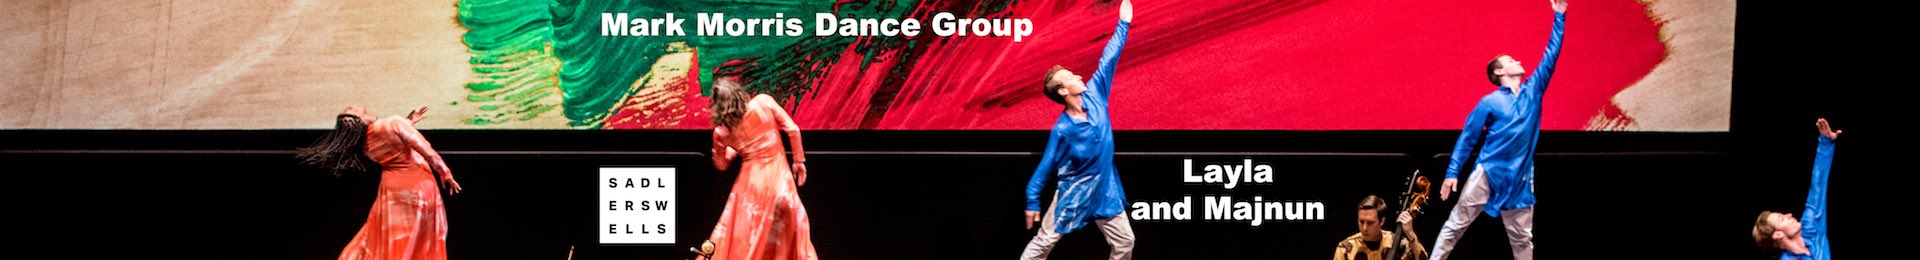 Mark Morris Dance Group / Silkroad Ensemble: Layla and Majnun banner image